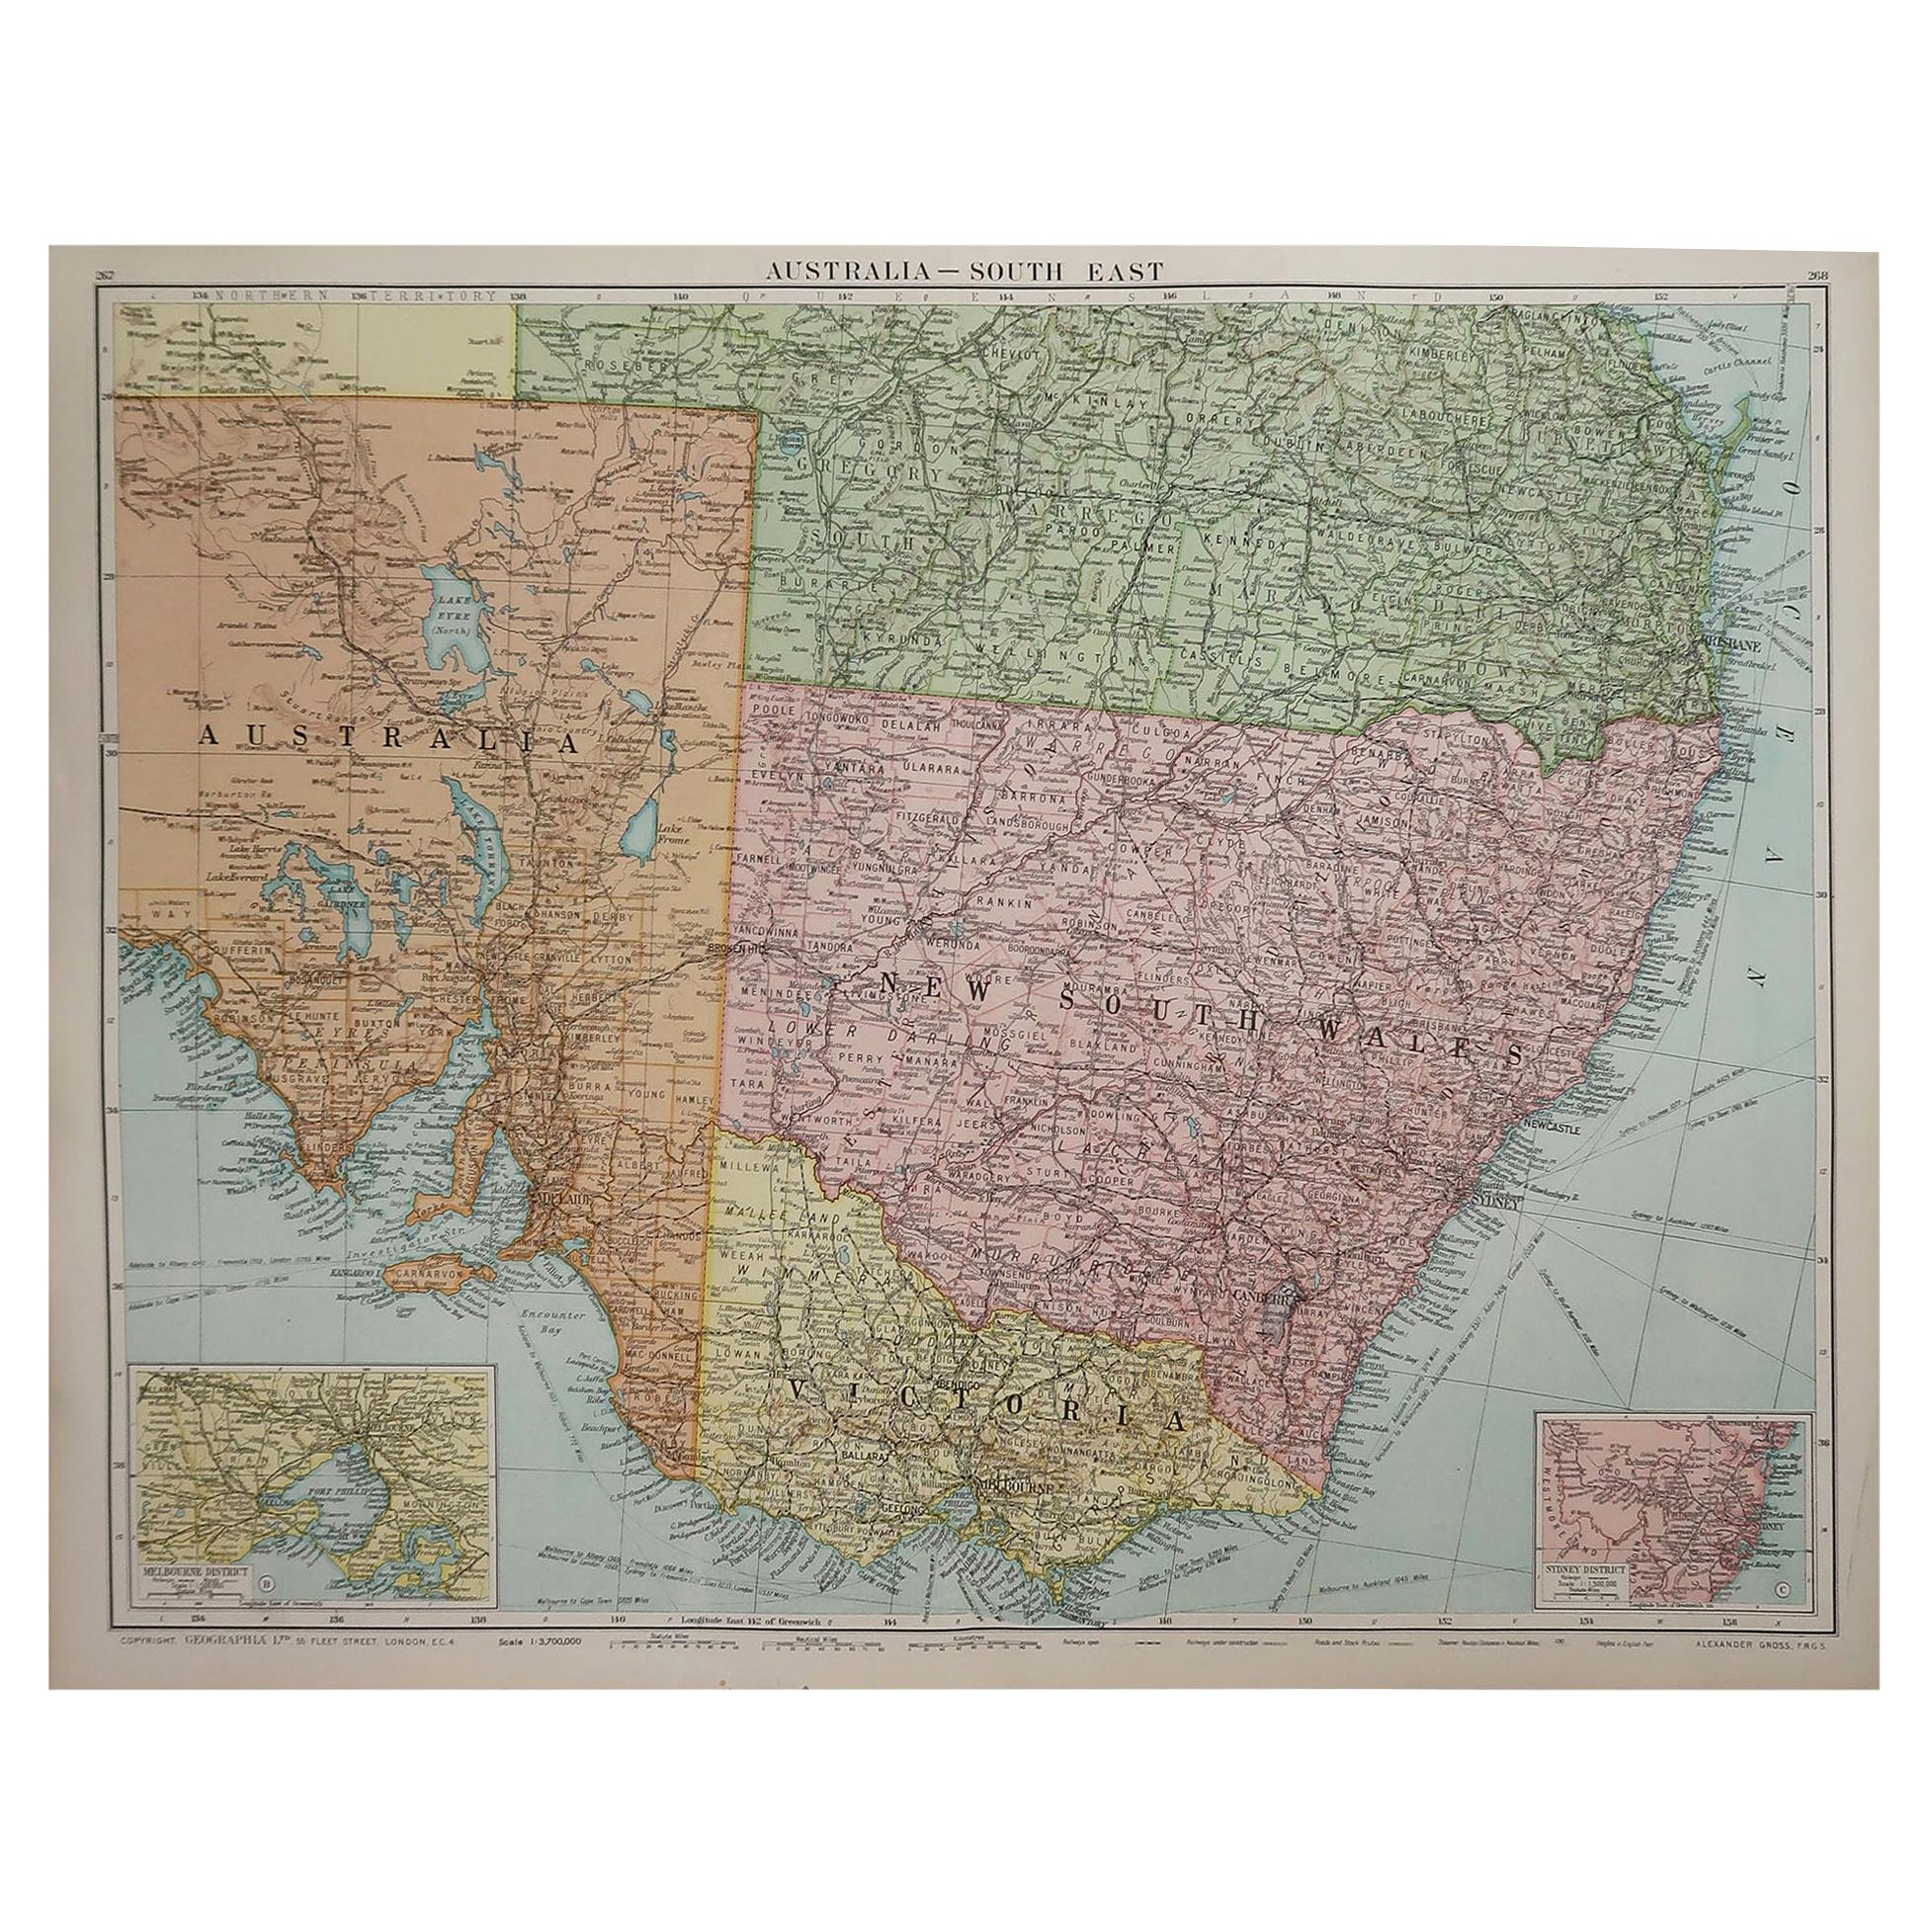 Große Original-Vintage-Karte von New South Wales, Australien, um 1920